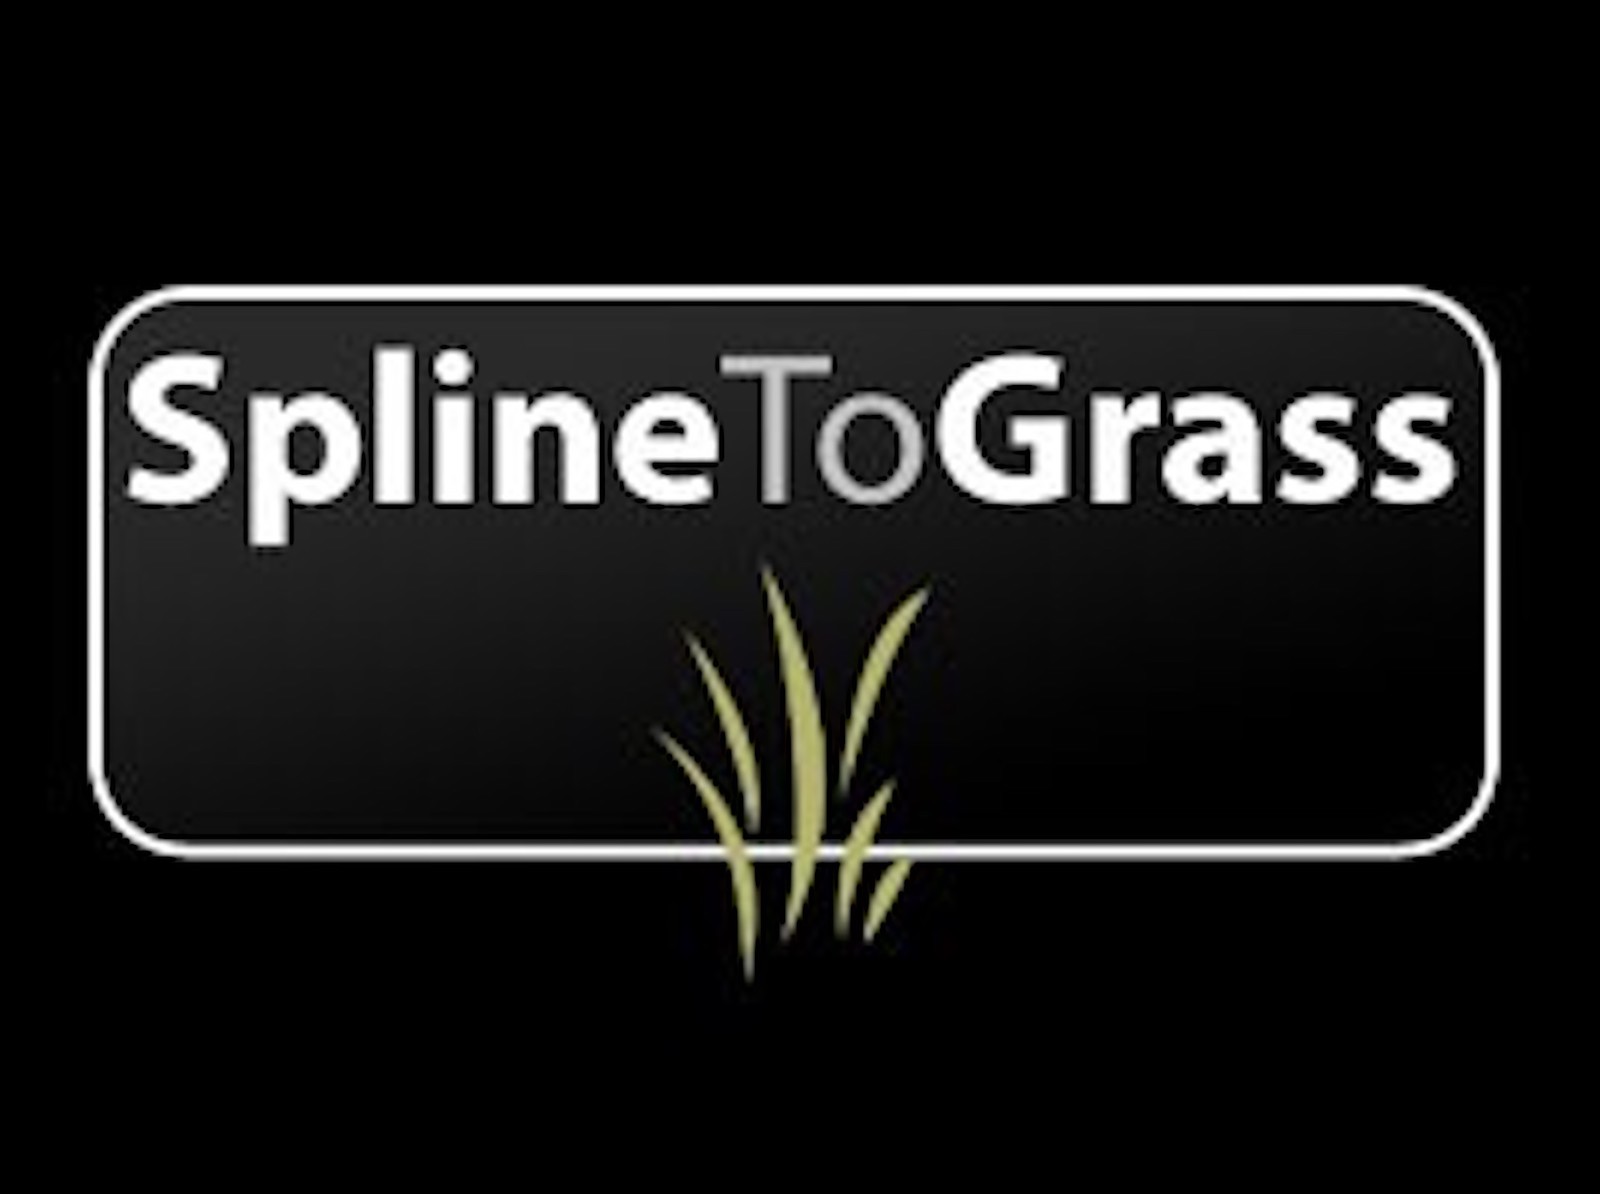 Spline To Grass plugin